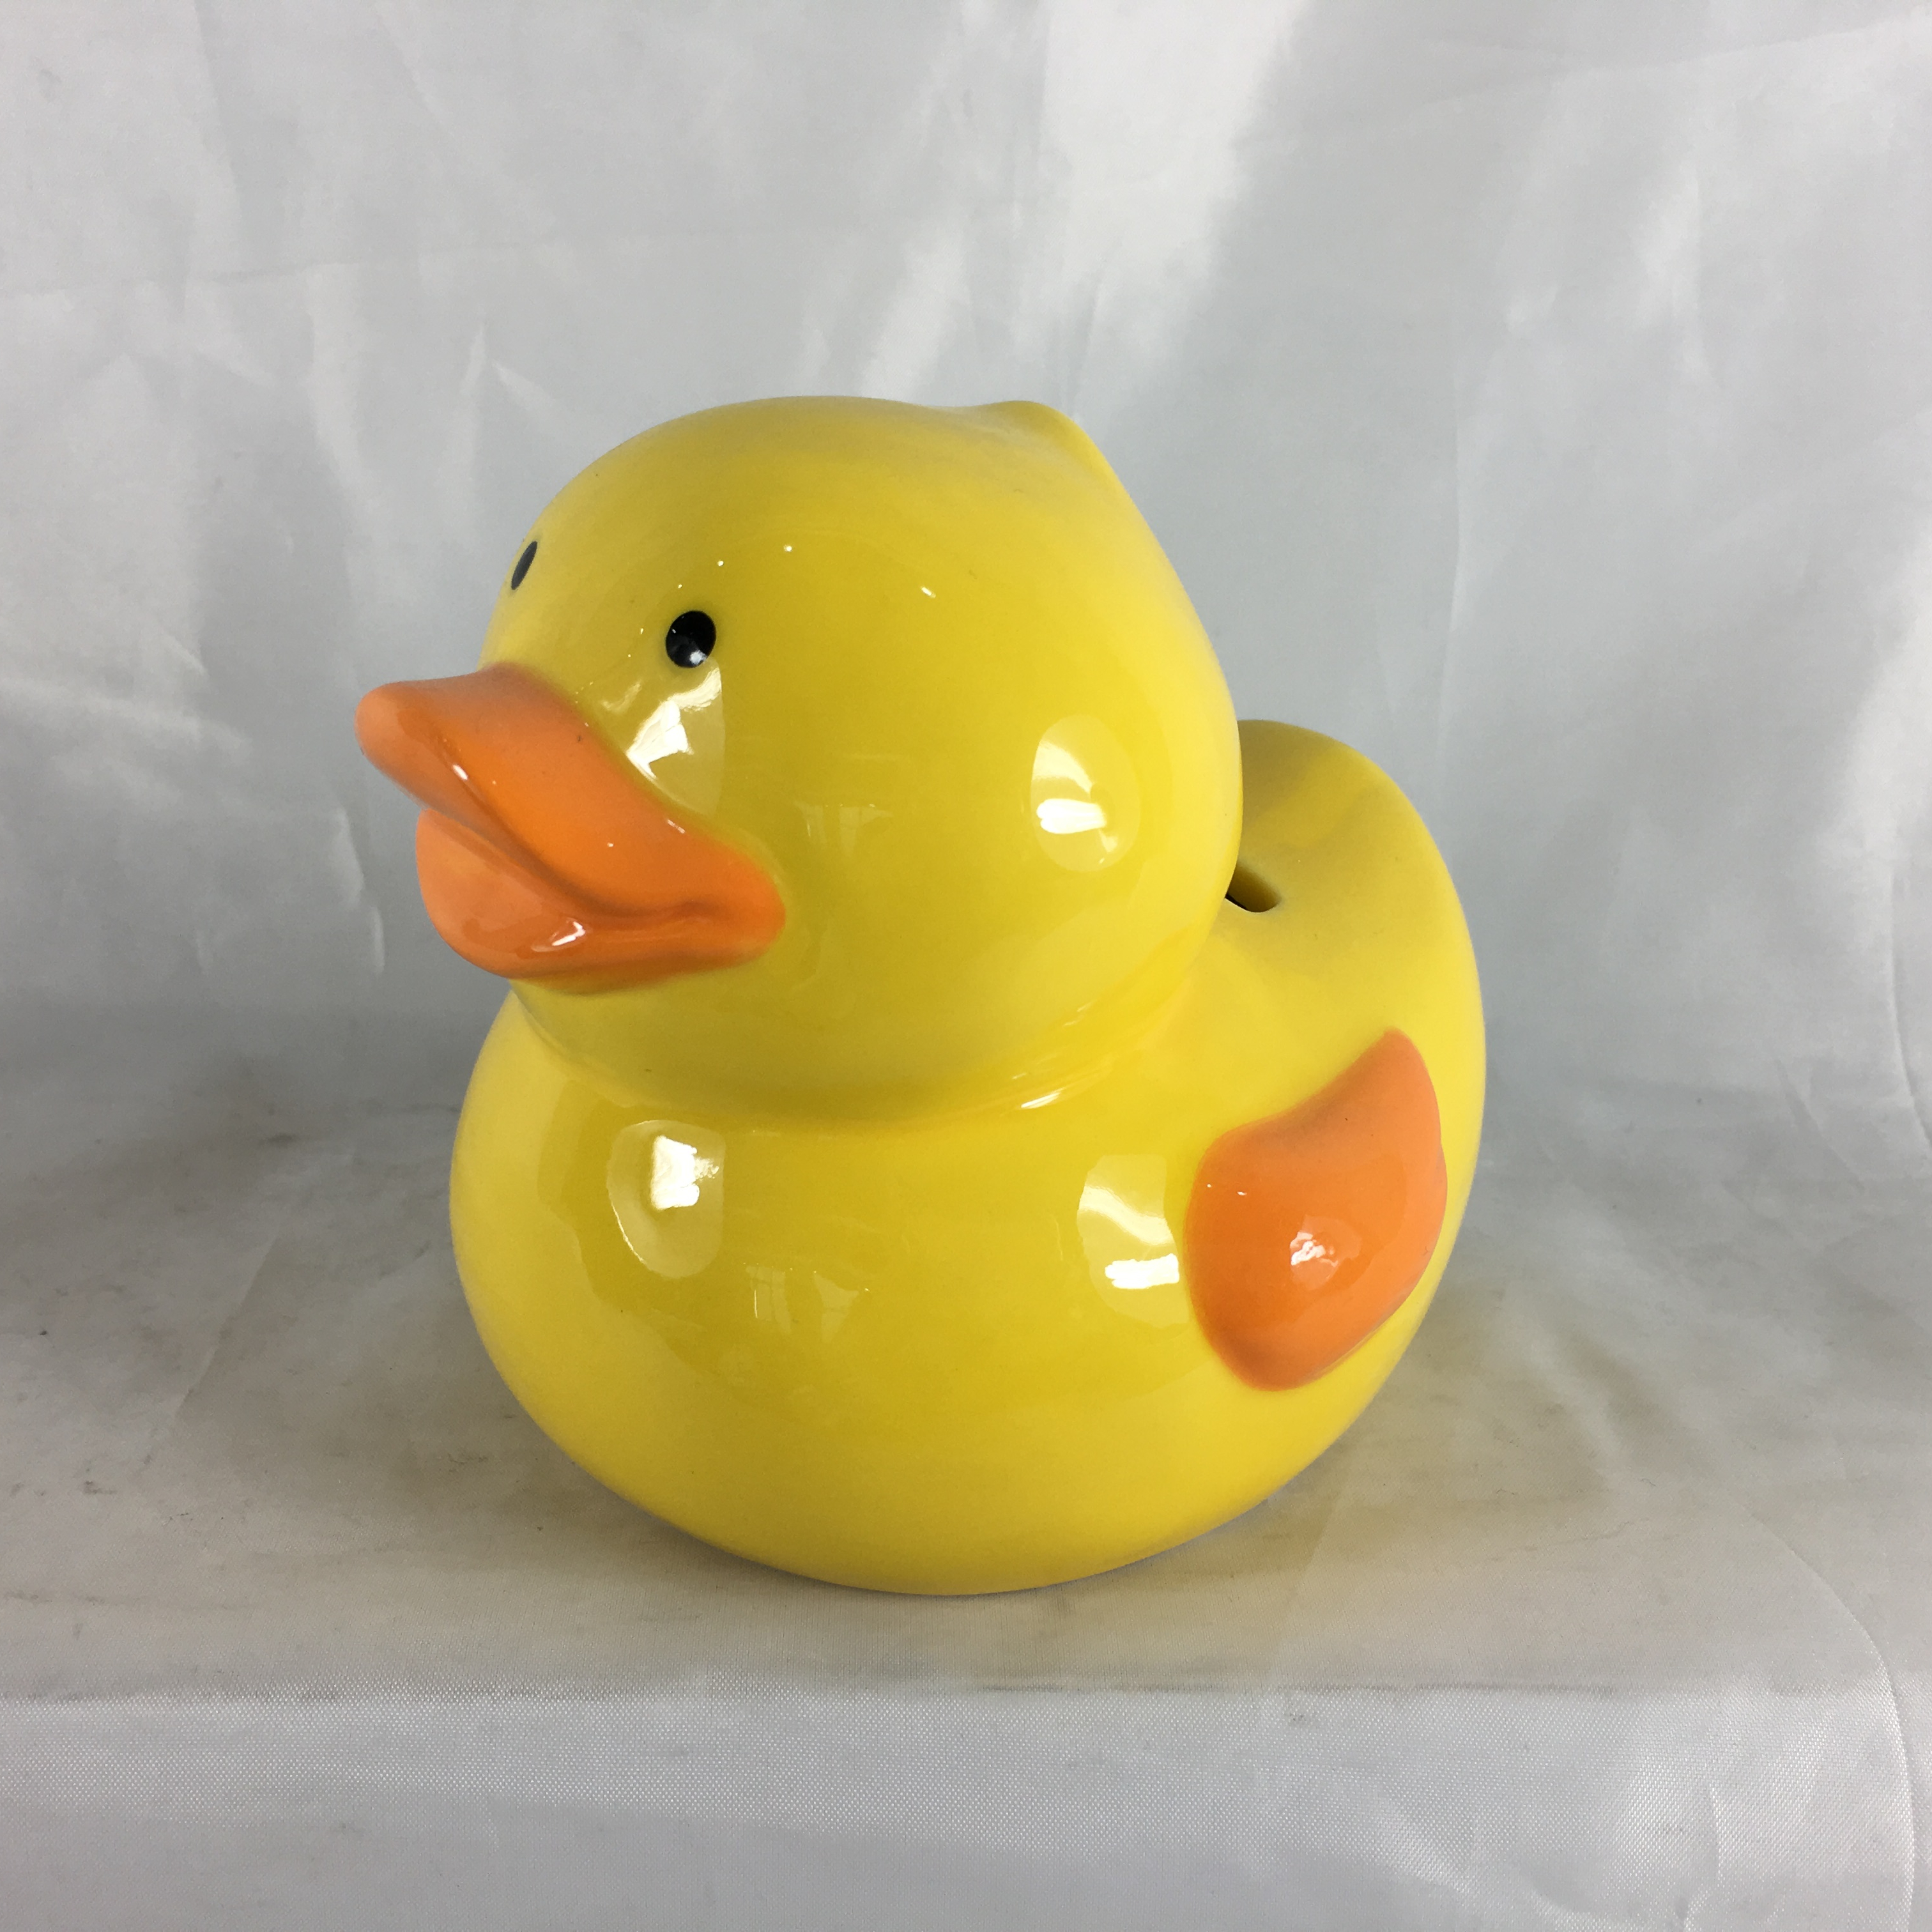 2018Little Yellow Duck shape ceramic coin bank animal design money bank